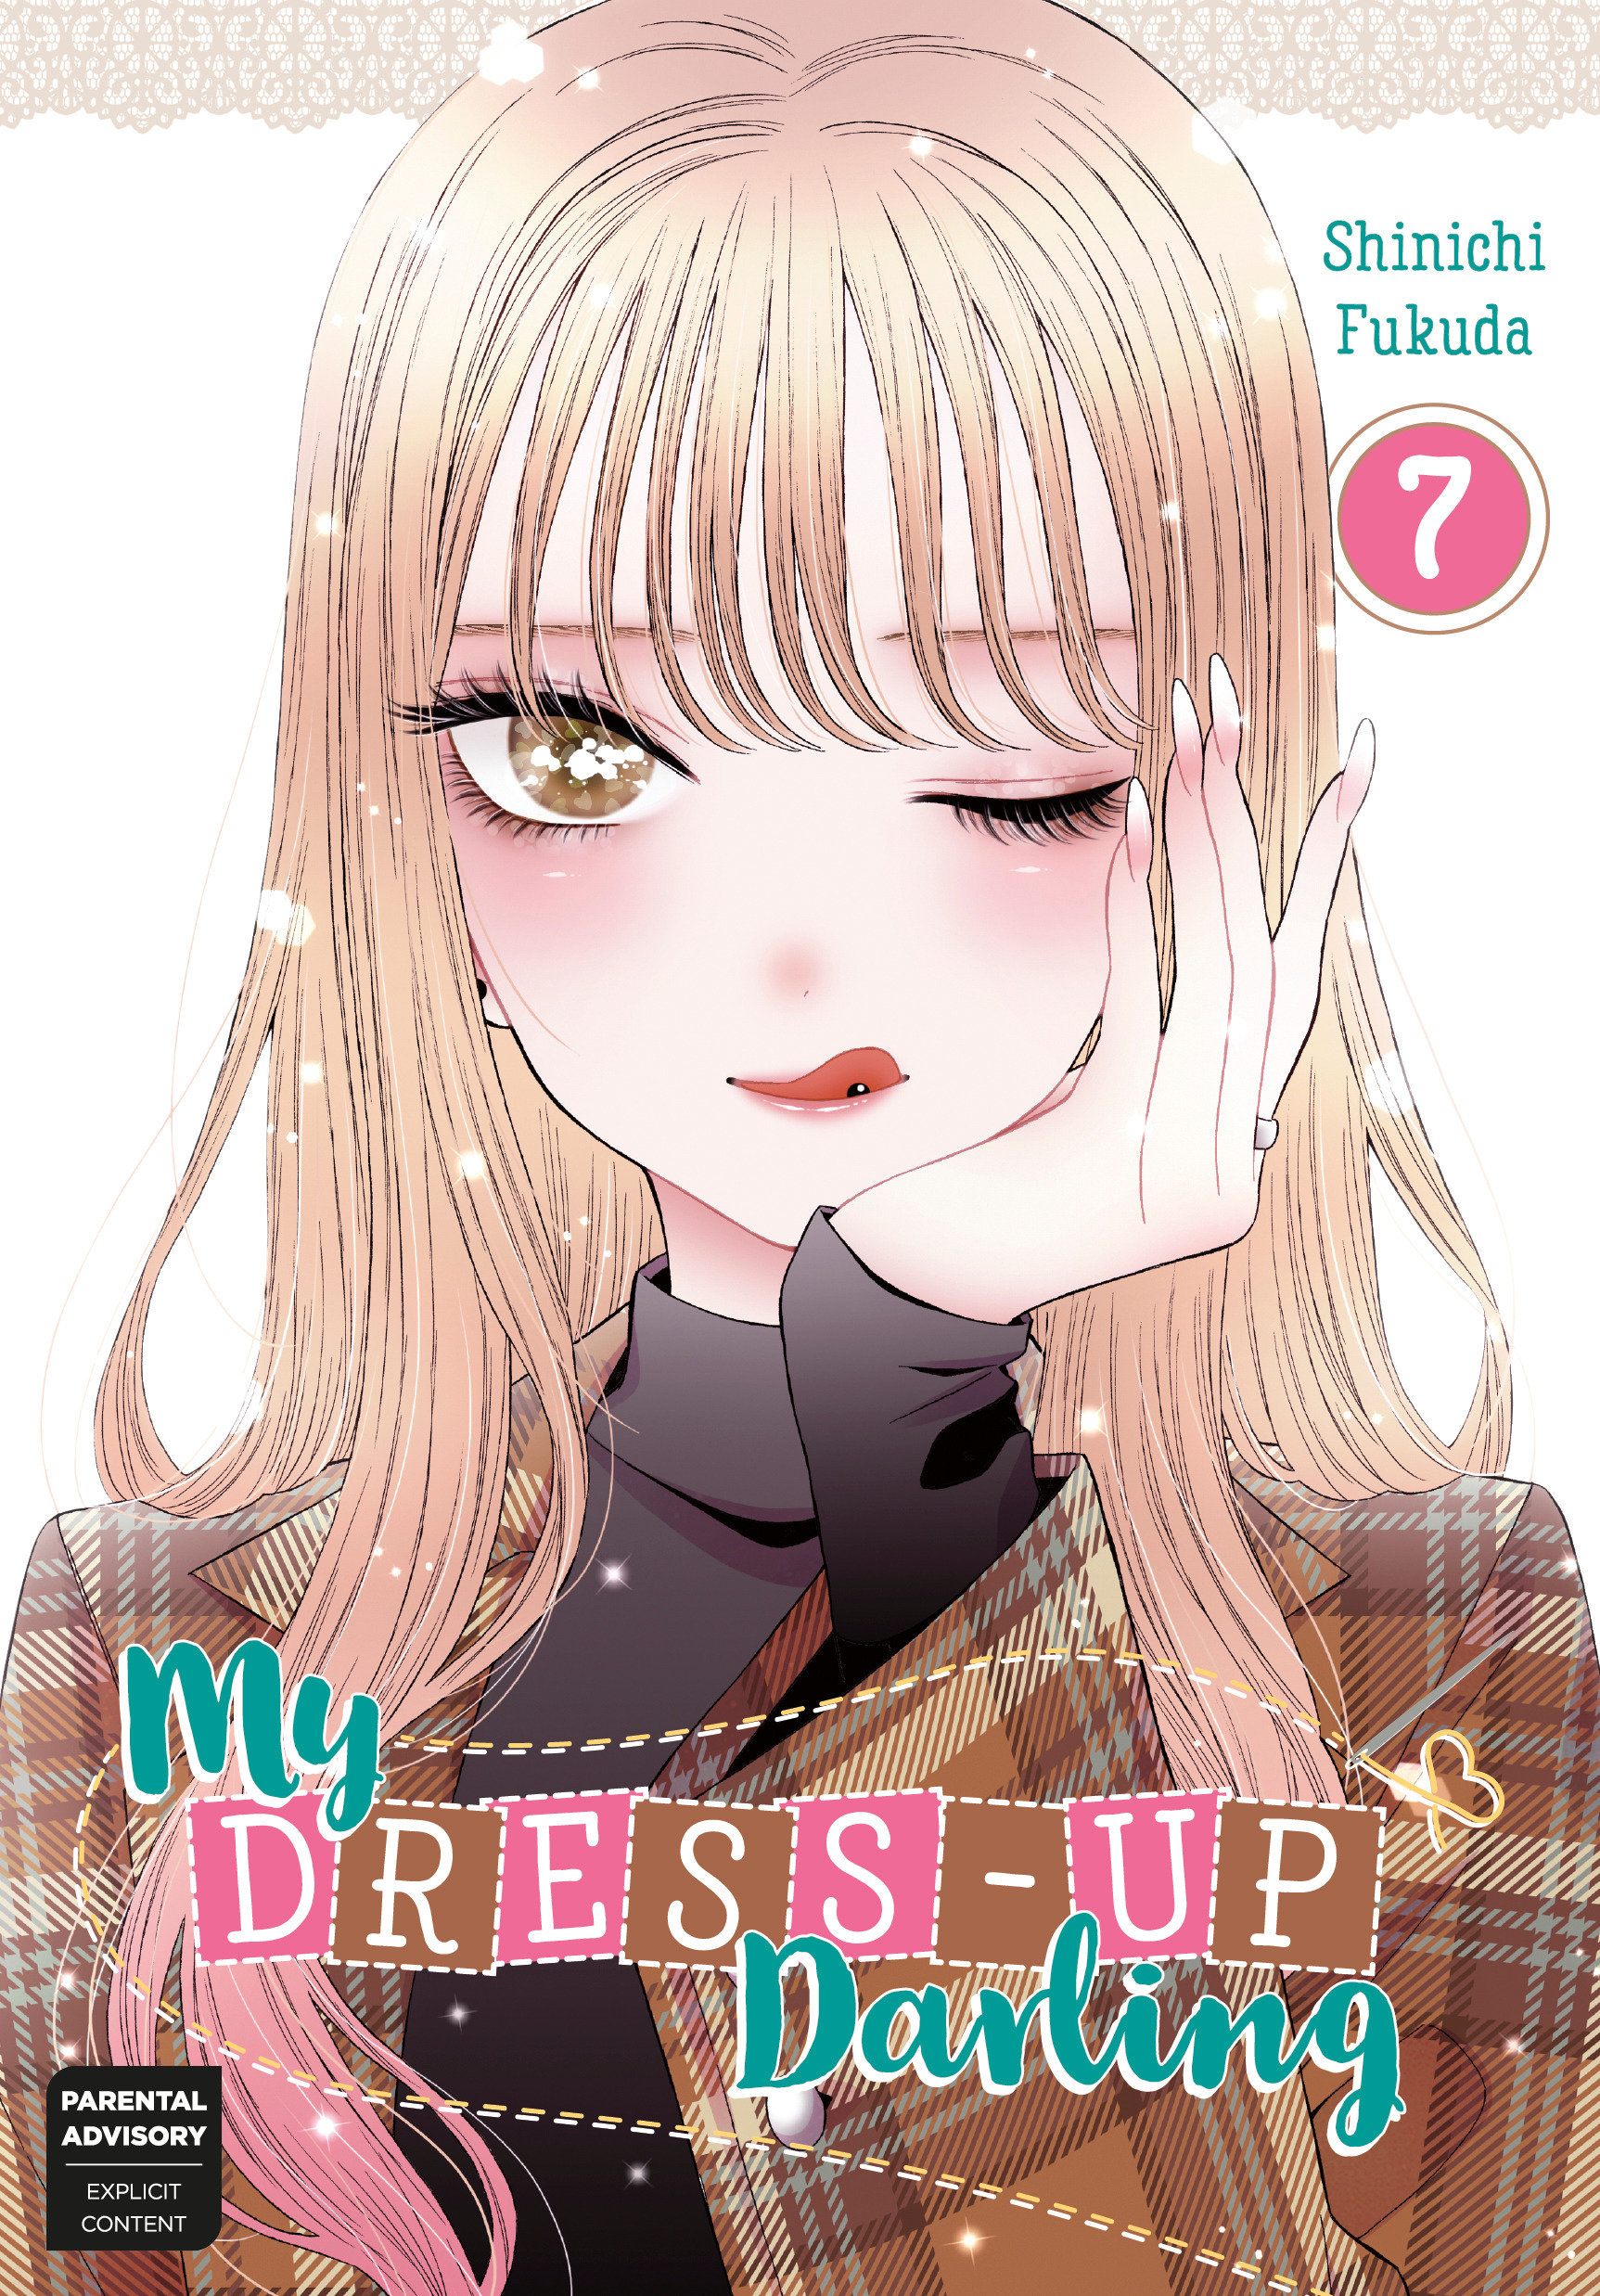 My Dress Up Darling Manga Volume 7